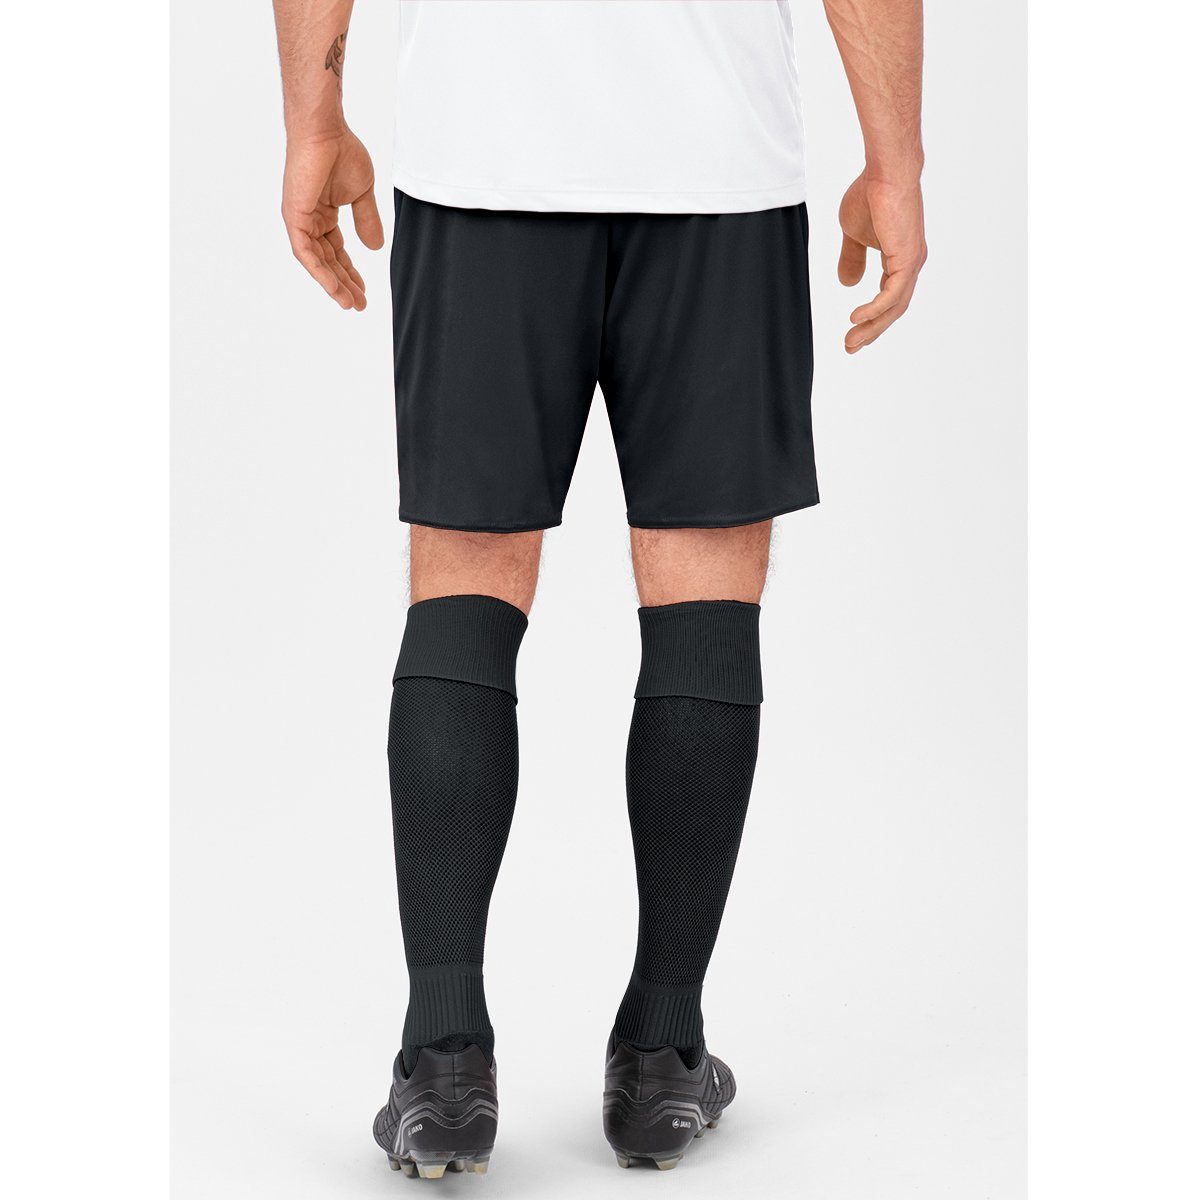 Manchester Sporthose schwarz/weiý Jako 2.0 Shorts